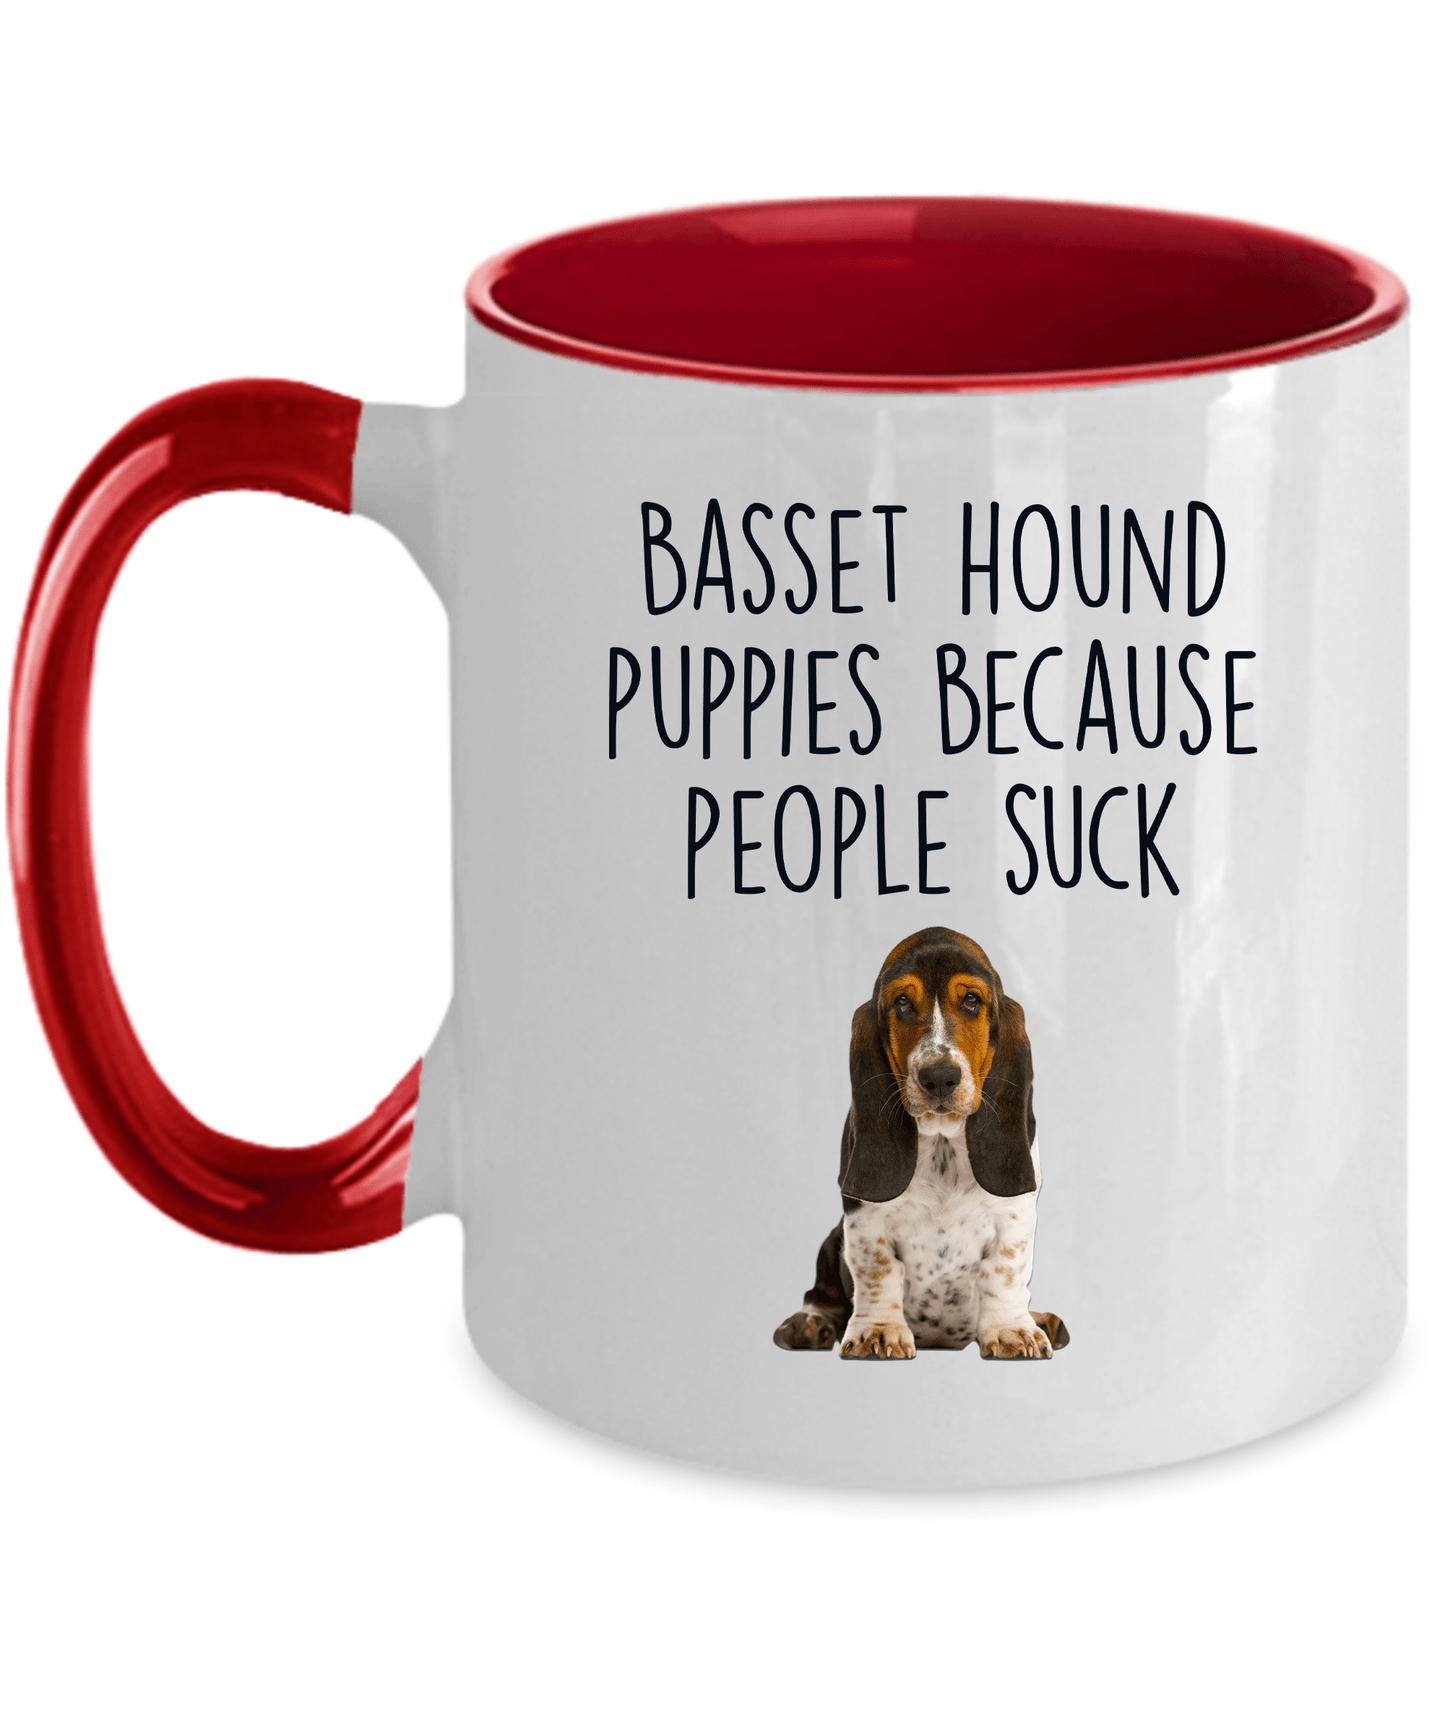 Basset Hound Puppies Because People Suck Funny Dog Custom Ceramic Coffee Mug